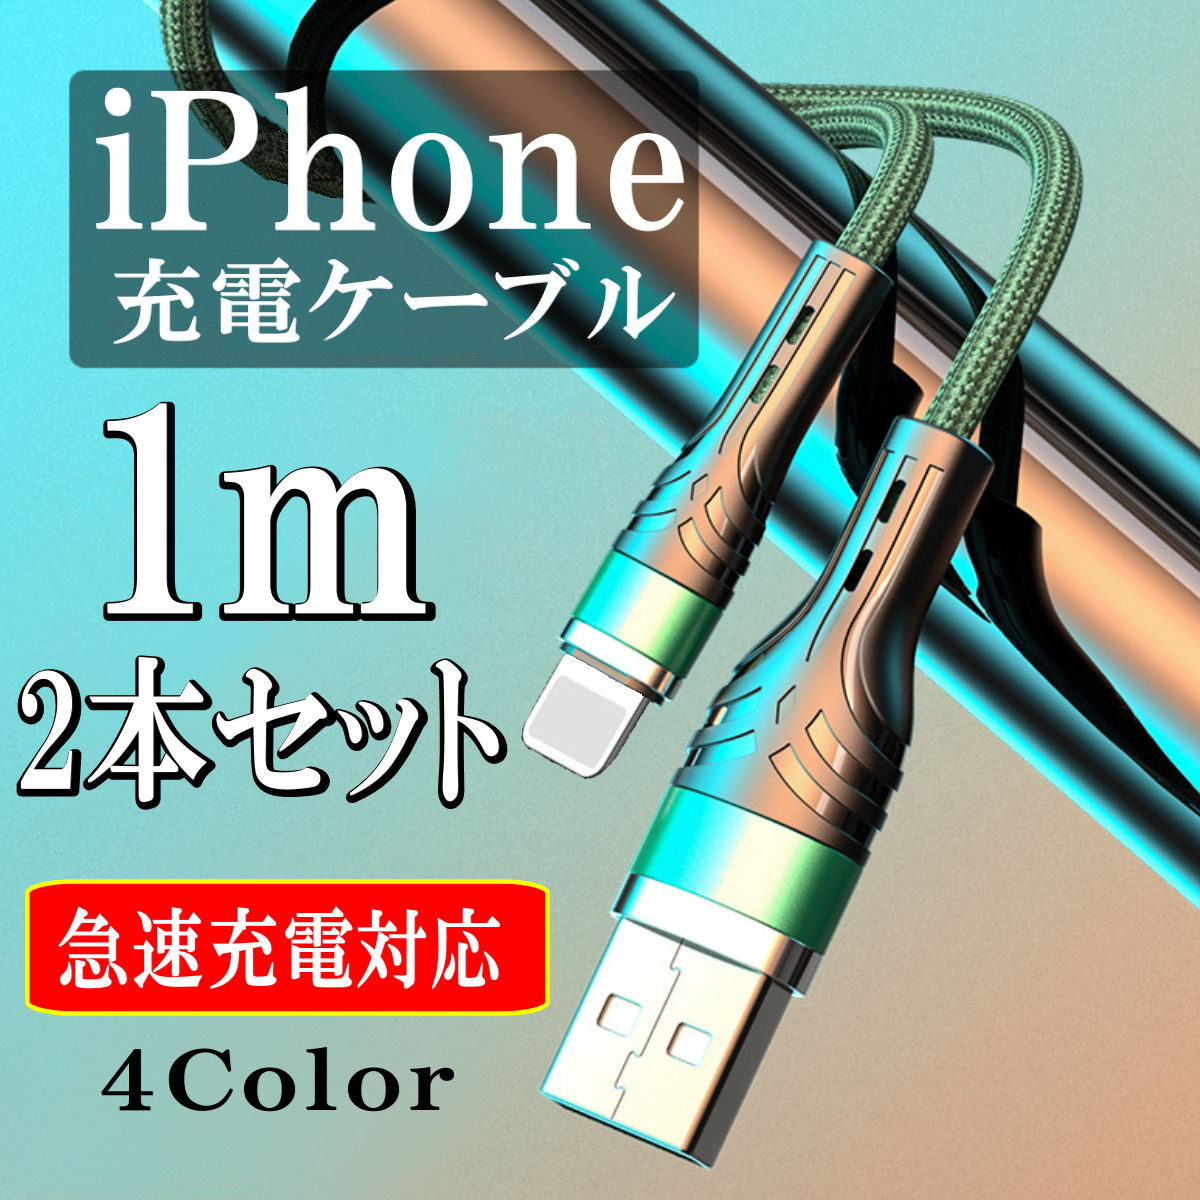 iPhone 充電ケーブル 急速充電 充電器 ライトニング iPhone11 iPhone12 lightning スマホ ケーブル 断線防止 携帯  コード 純正品質 1m 2本セット 通販 